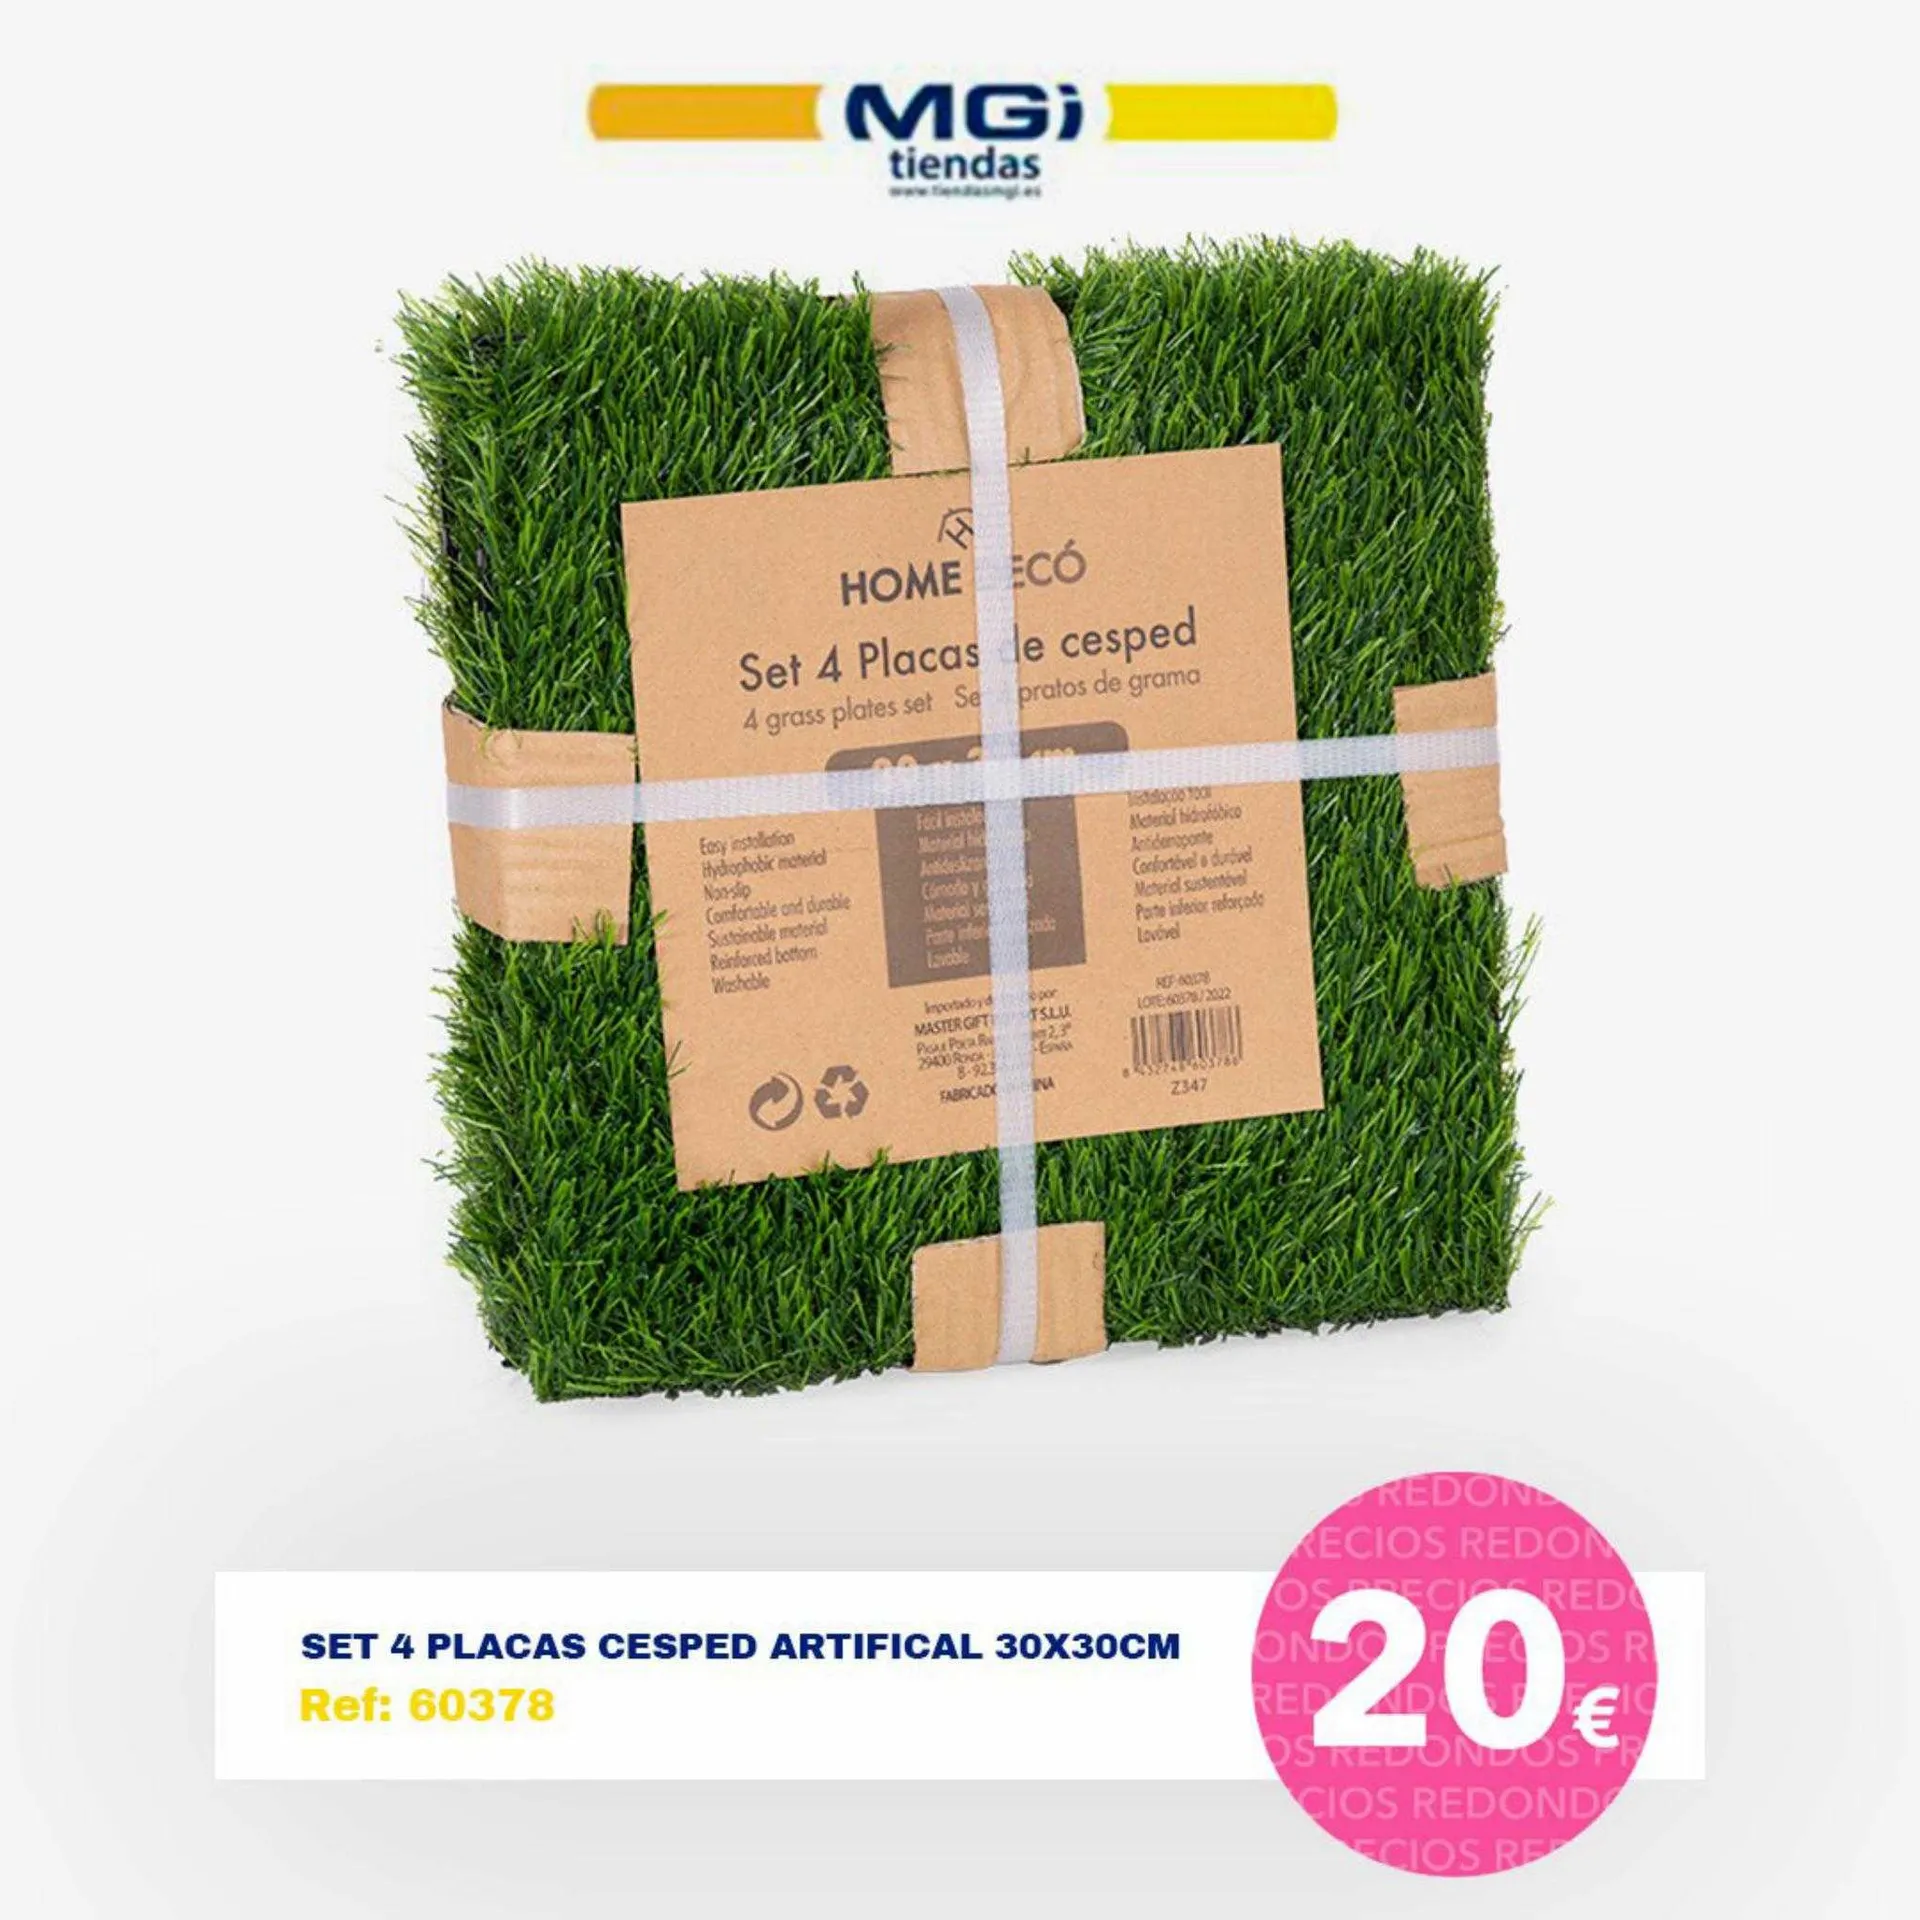 Catálogo Tiendas MGI - 1